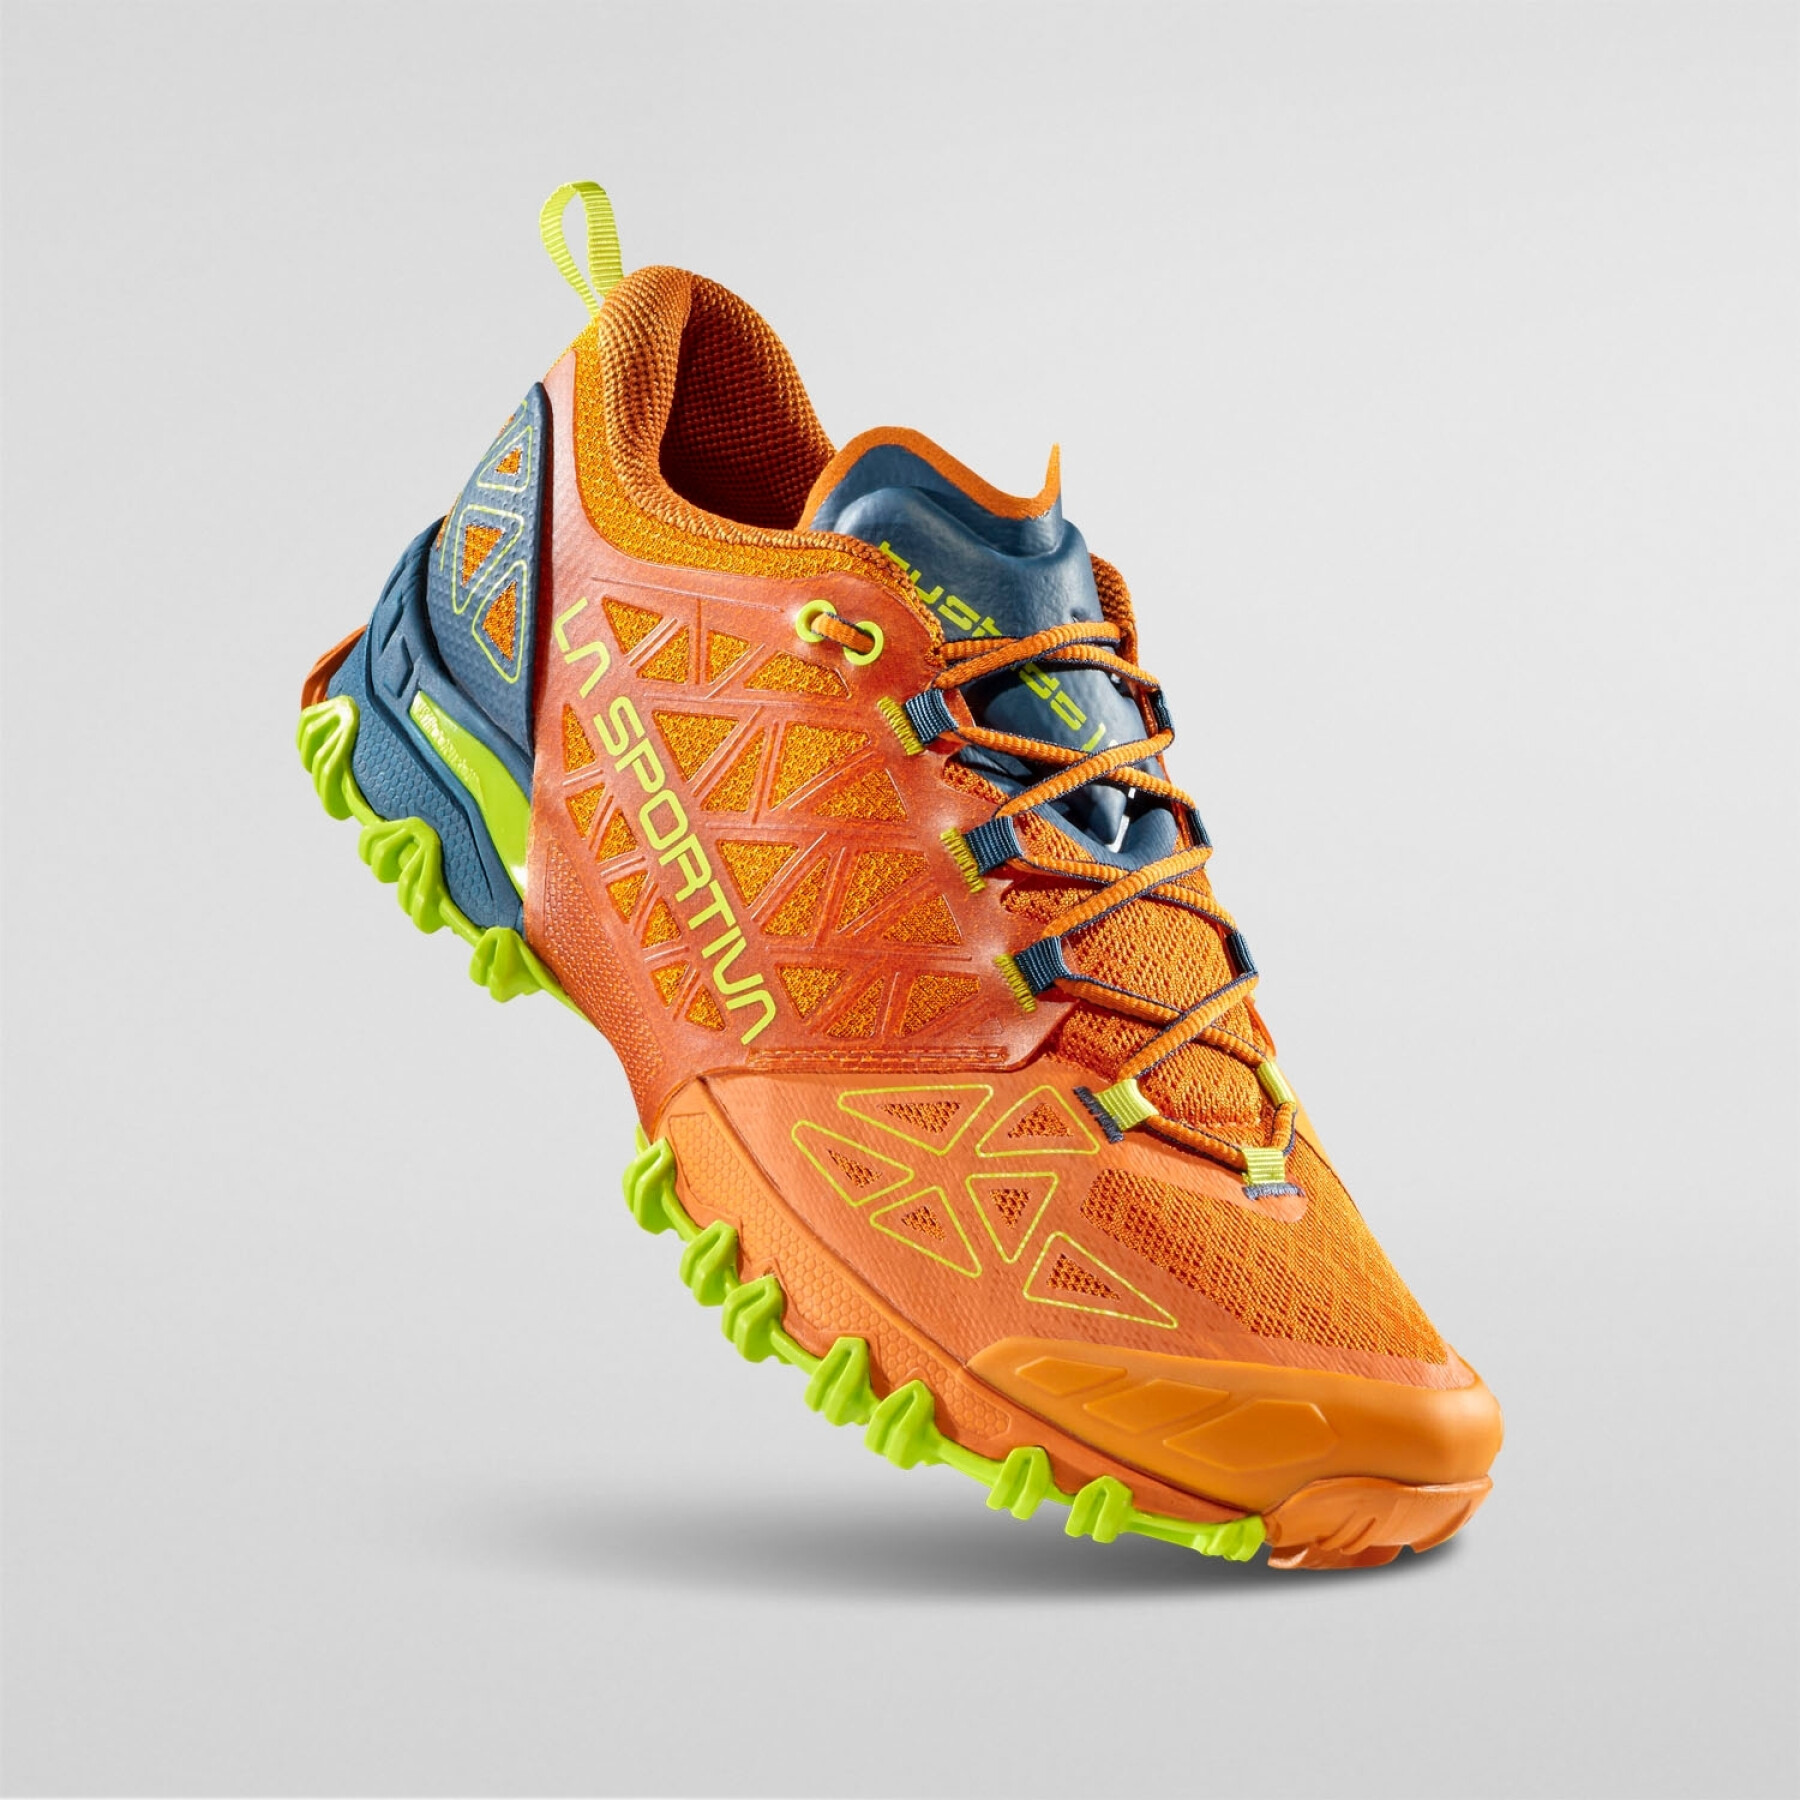 Trail running shoes La Sportiva Bushido II